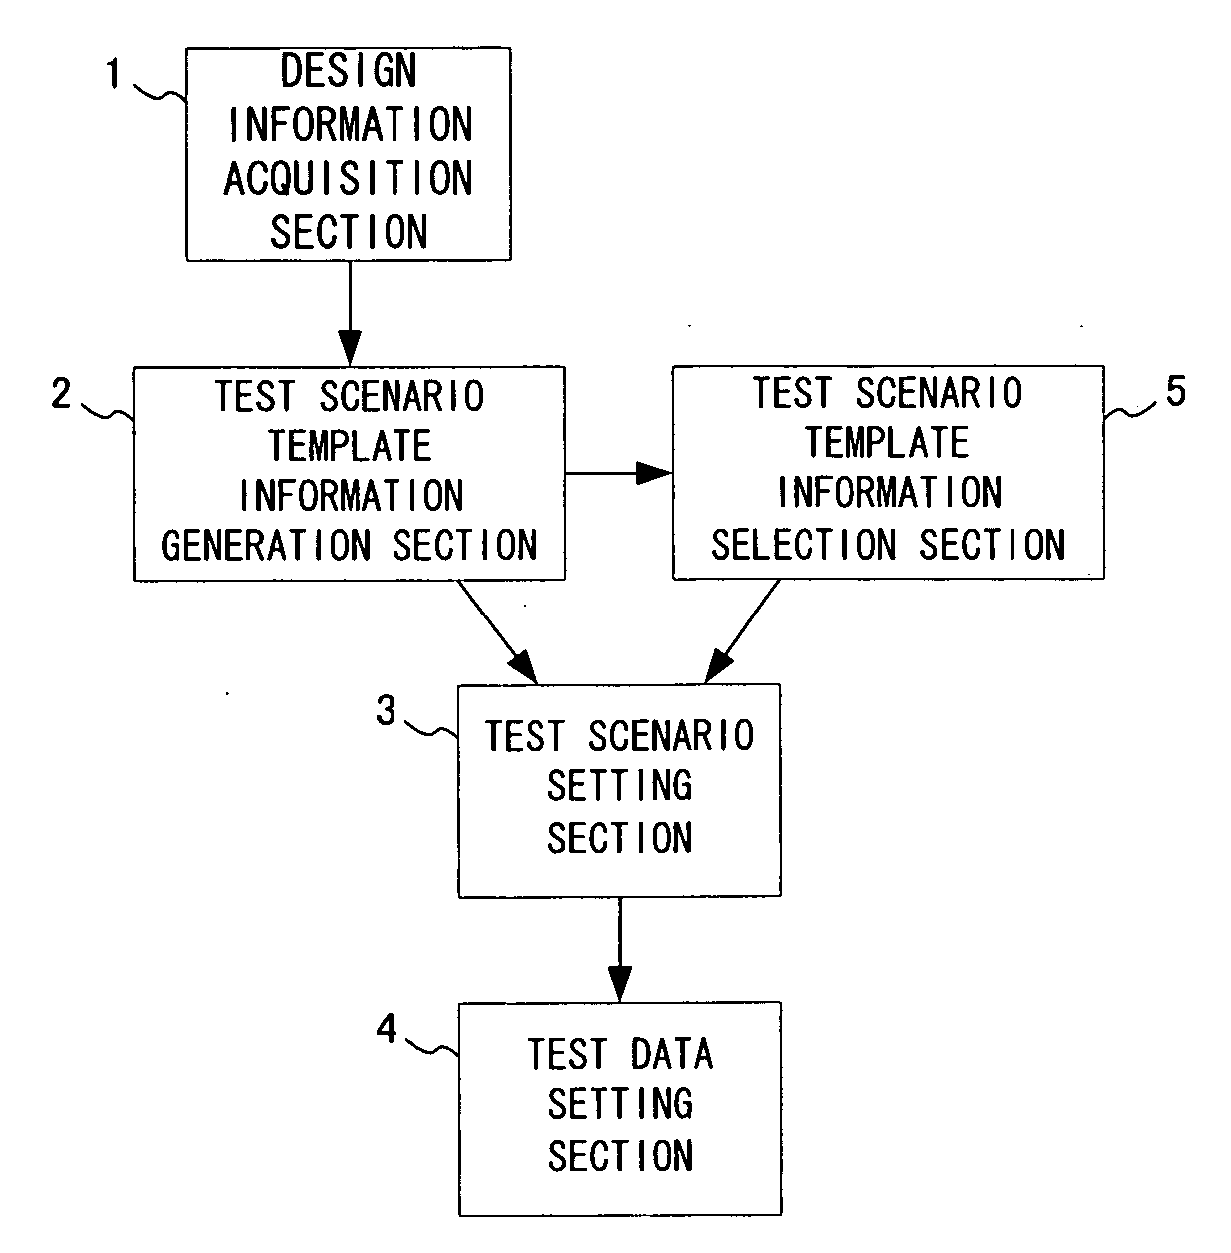 Test scenario generation program, test scenario generation apparatus, and test scenario generation method